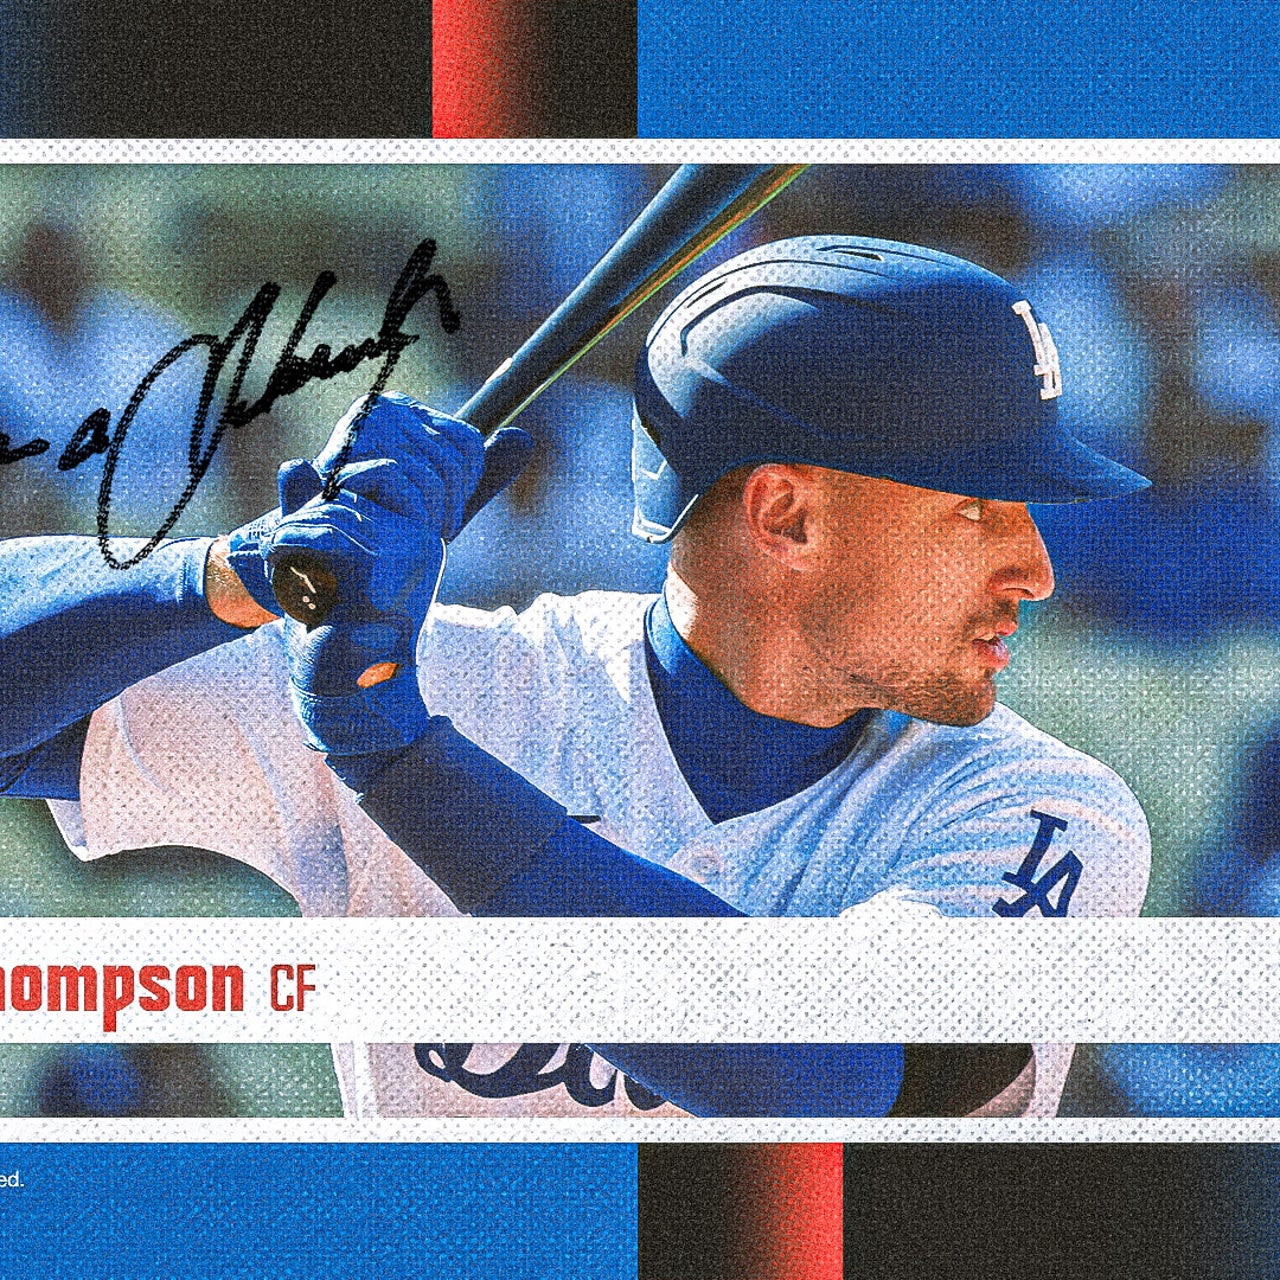 Los Angeles Dodgers on X: Hey look, it's Trayce Thompson's